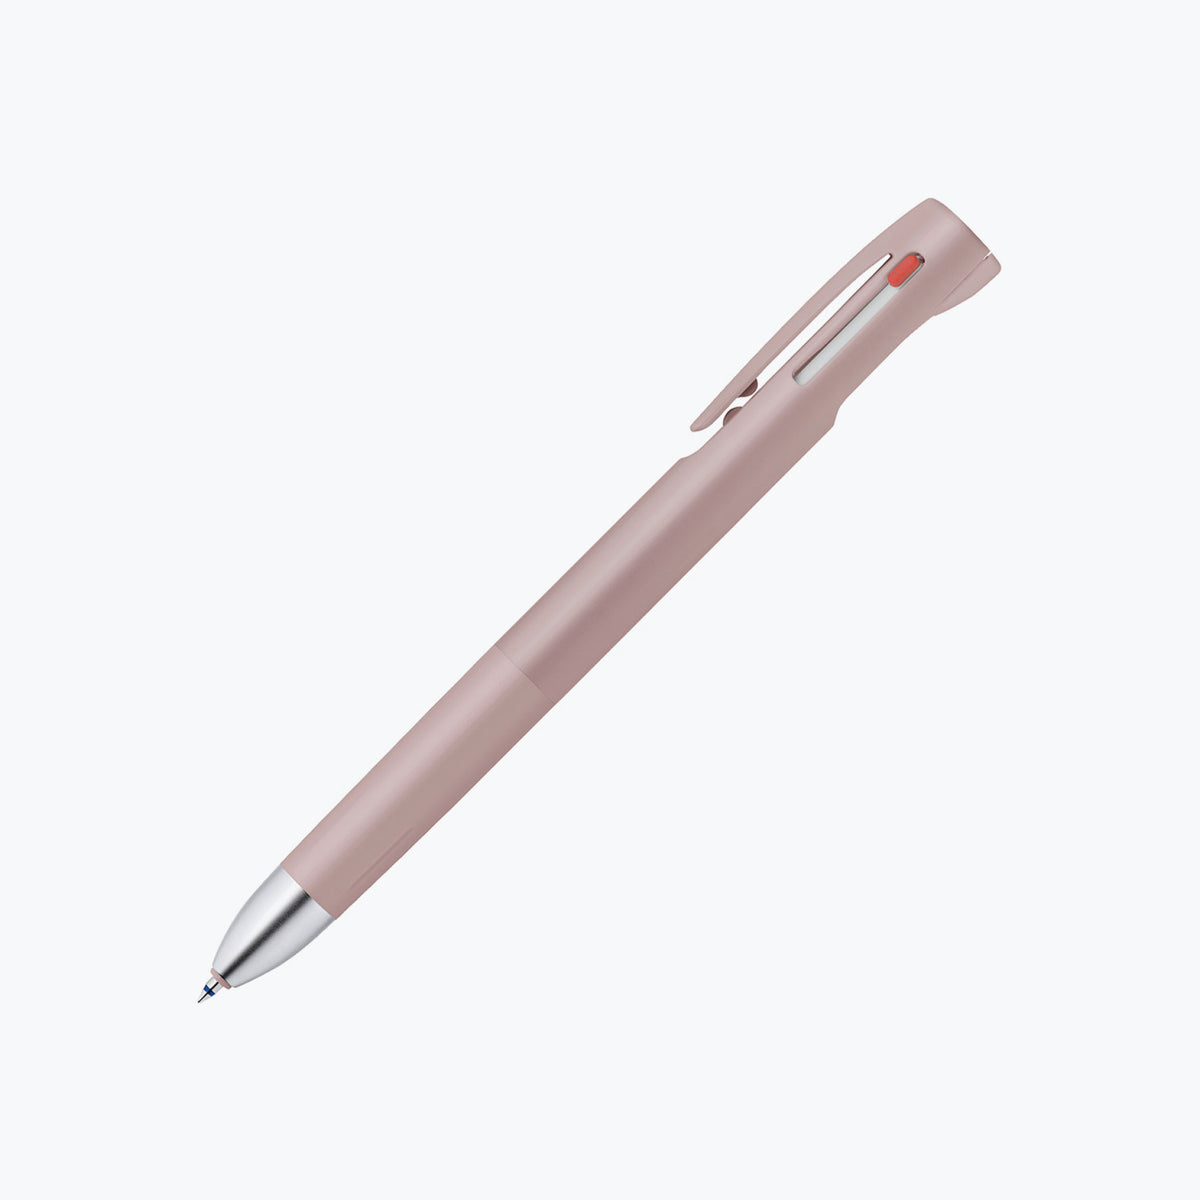 Zebra - Ballpoint Pen - Blen 3C - 0.5mm - Latte Color - Adzuki